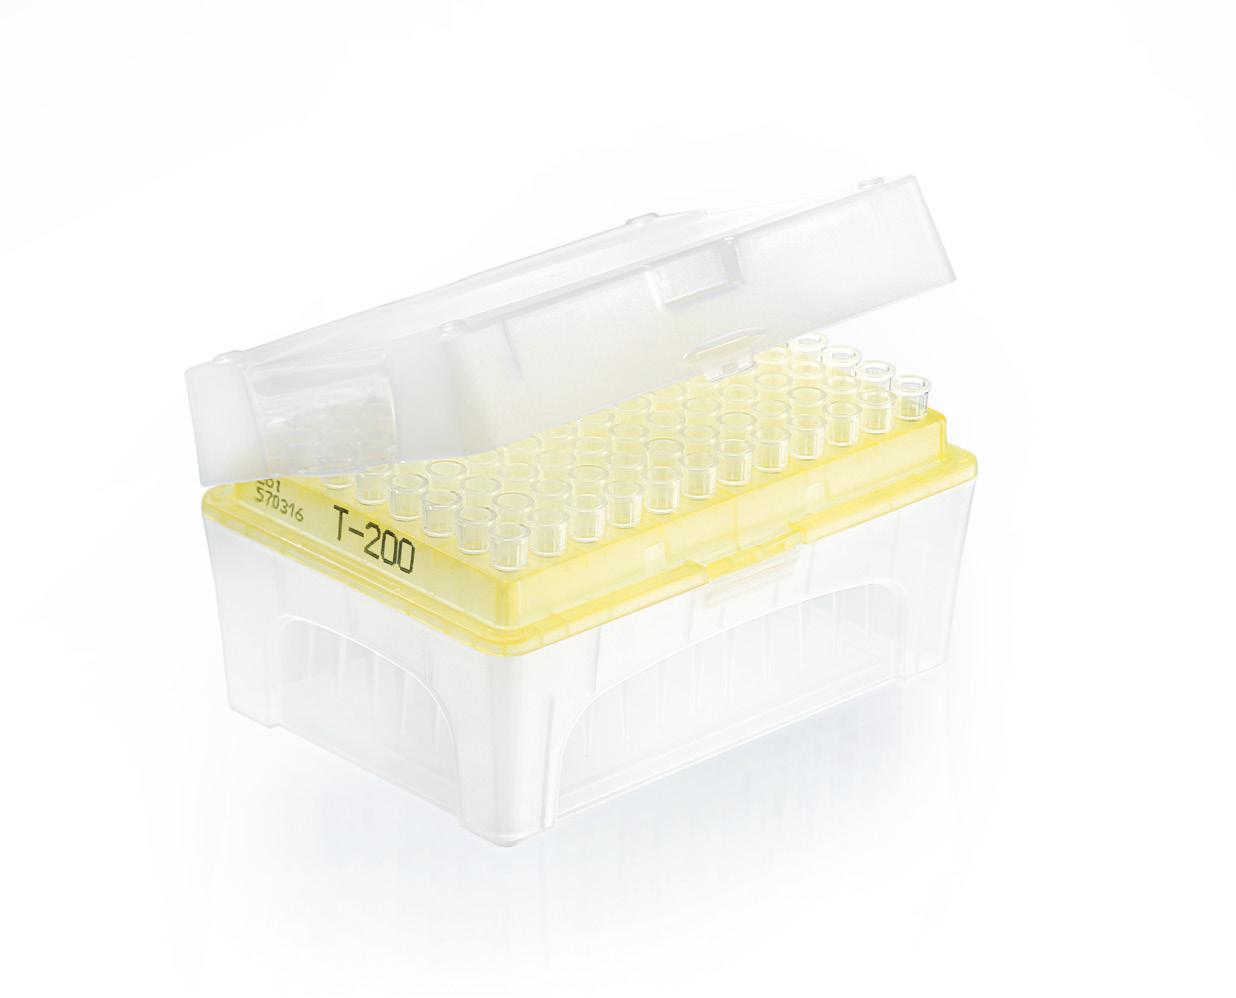 Filter tips racked DNA-/RNase-free IVD  TipBox 5 - 200 μl BIO-CERT PCK=960